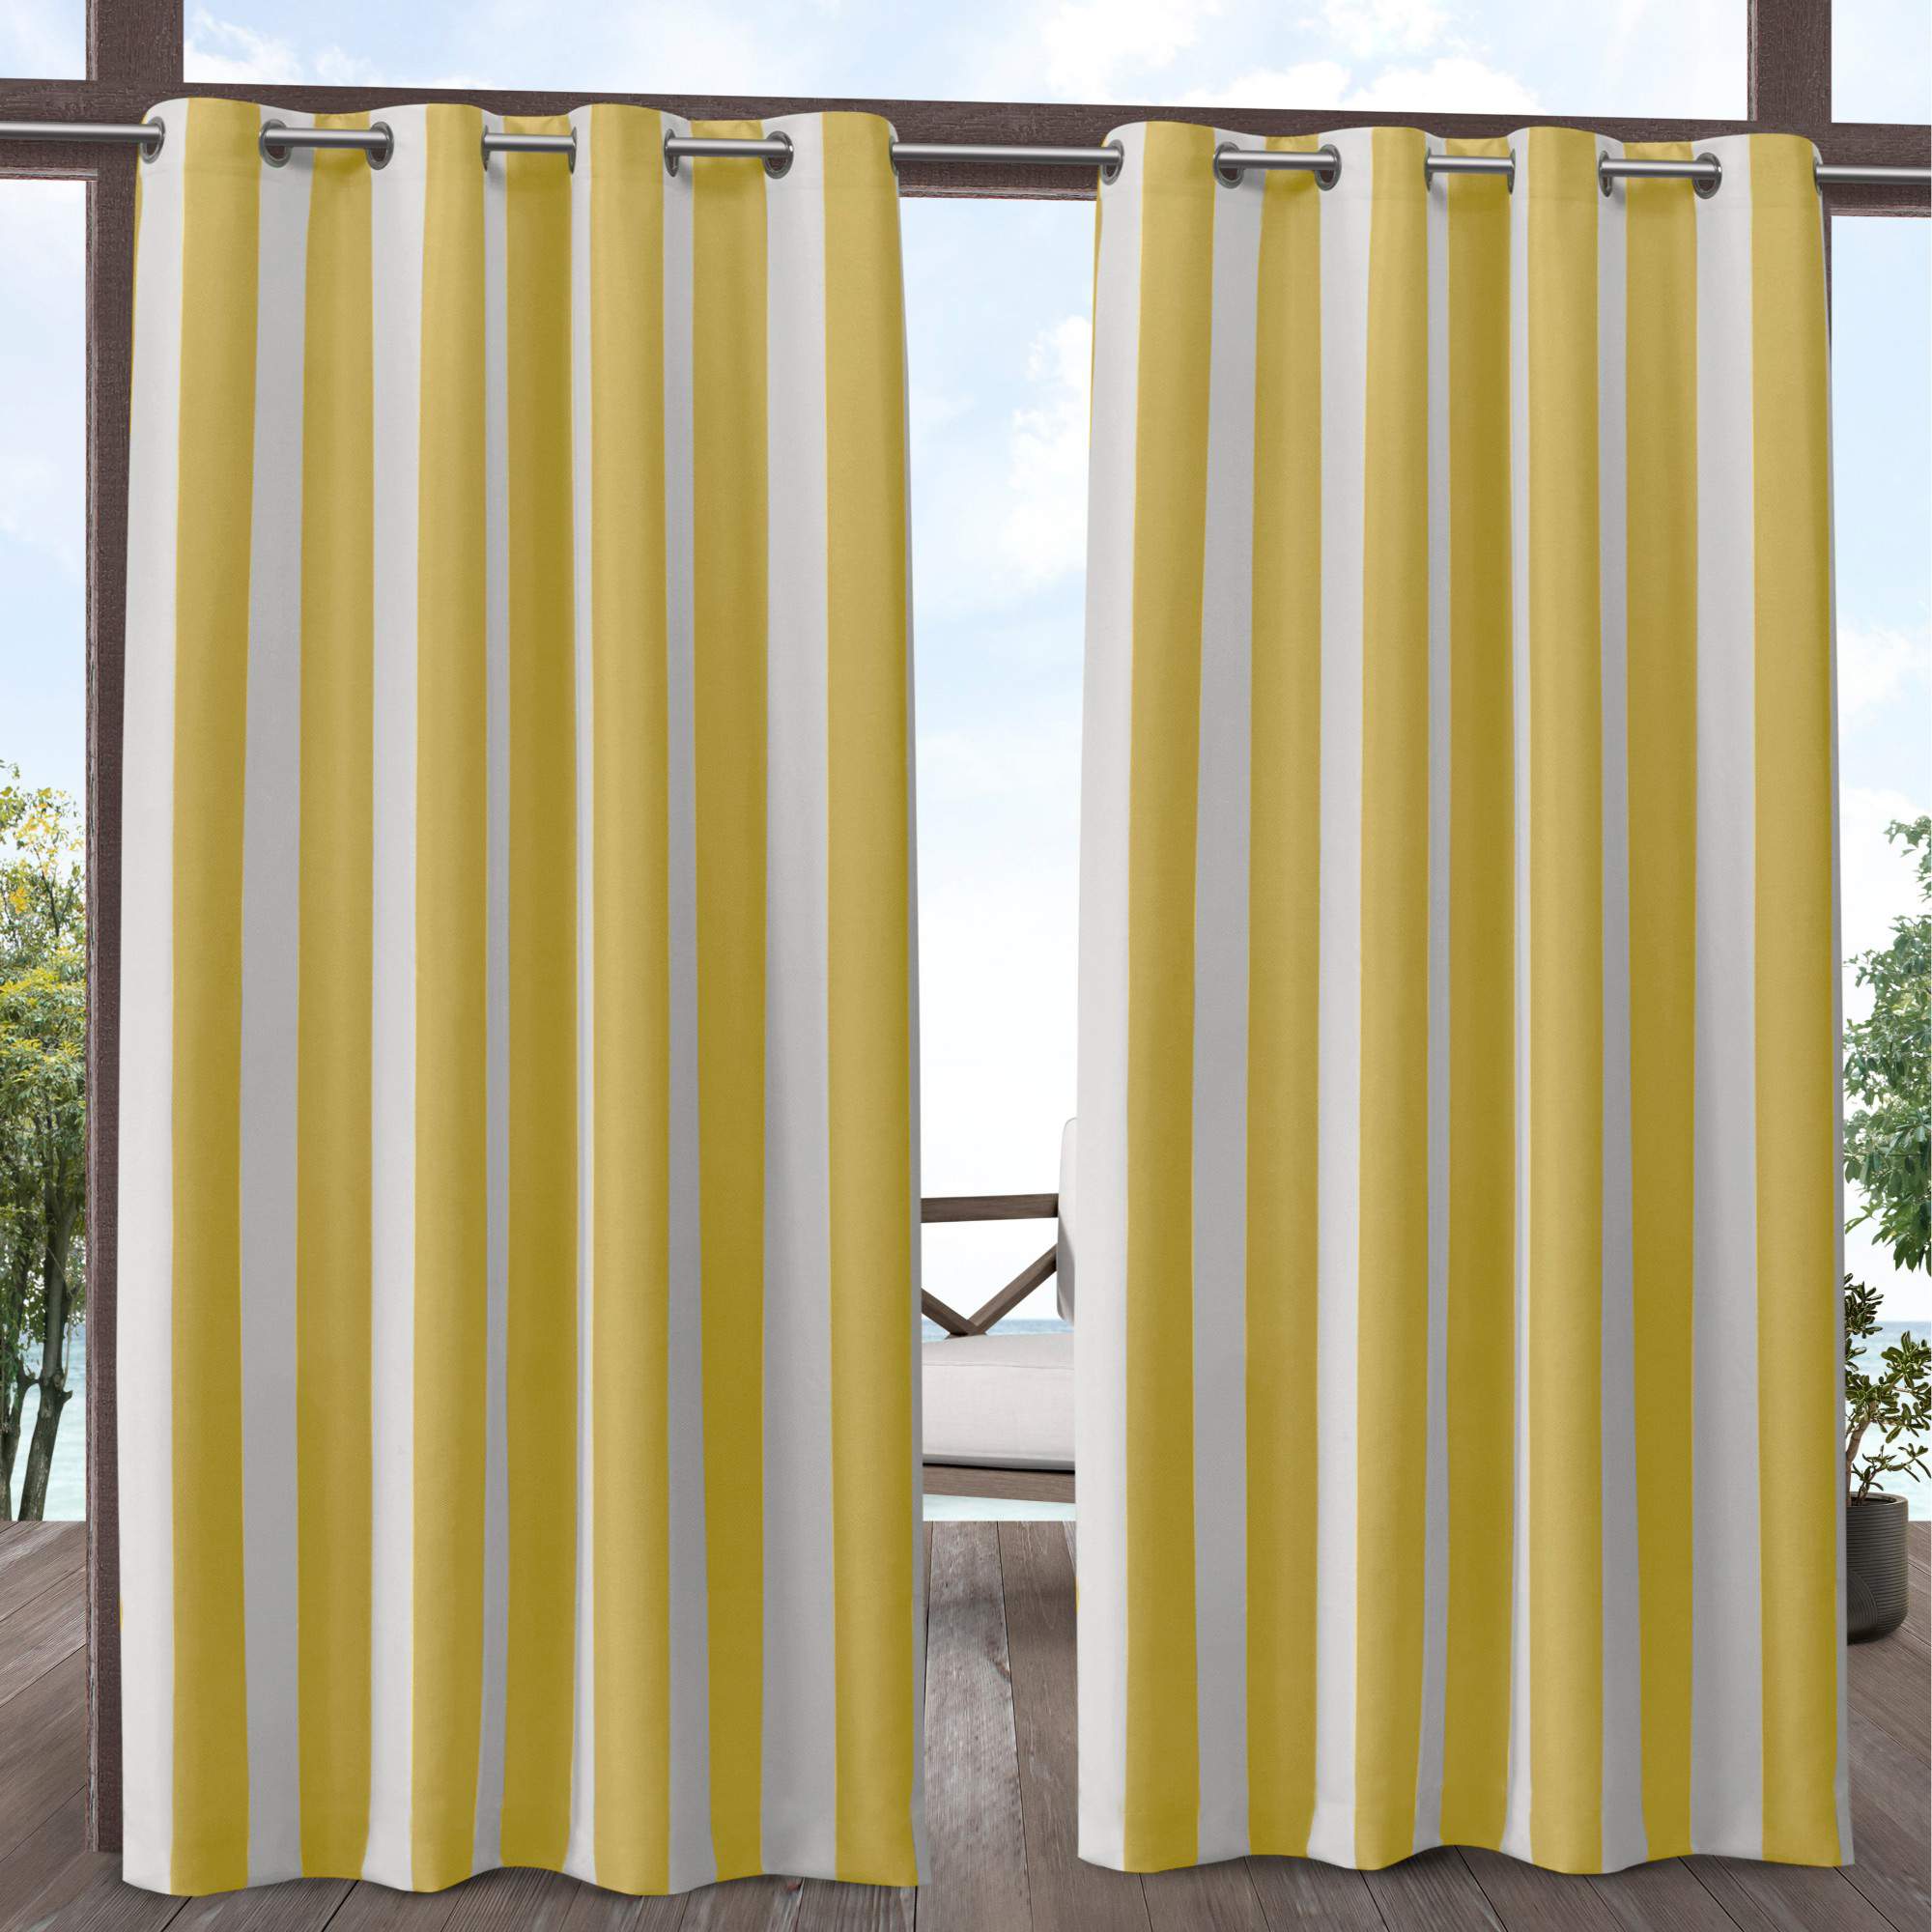 Exclusive Home Canopy Stripe Indoor/Outdoor Grommet Top Curtain Panel Pair, 54"x96", Sunbath / White - image 1 of 6